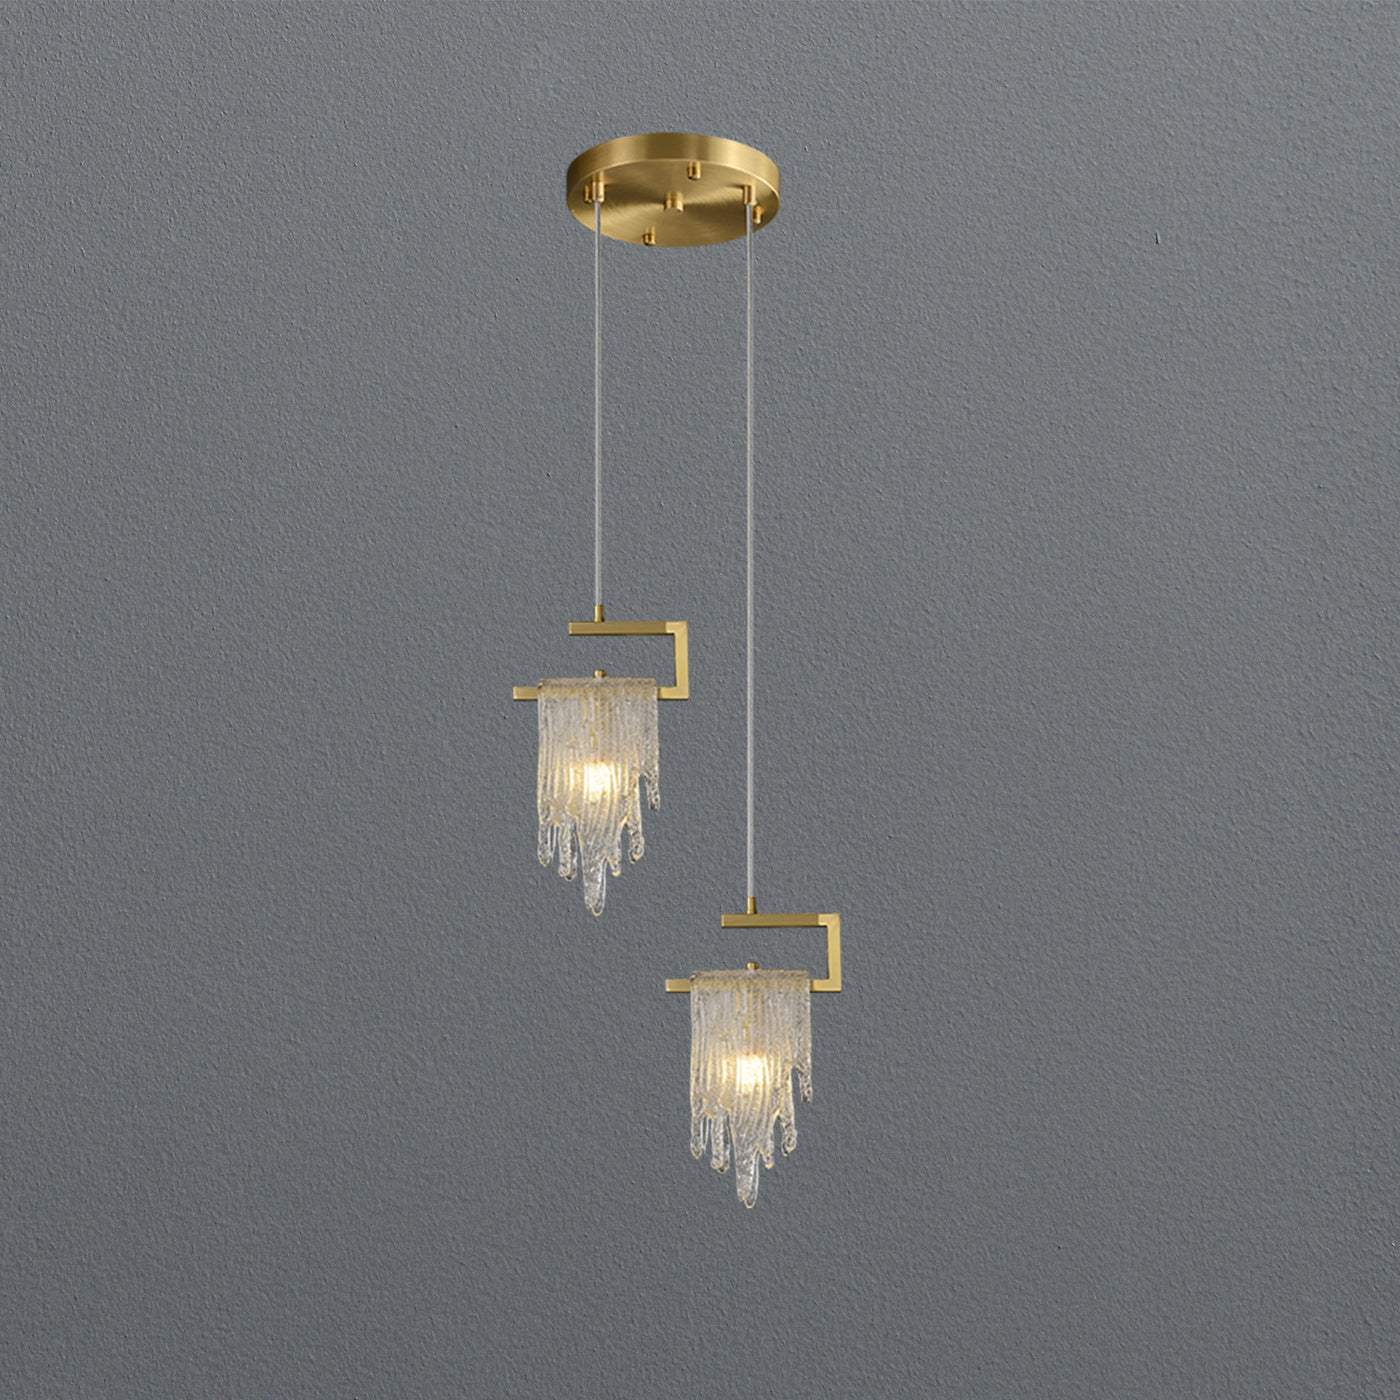 Classic Golden Ice cube chandelier